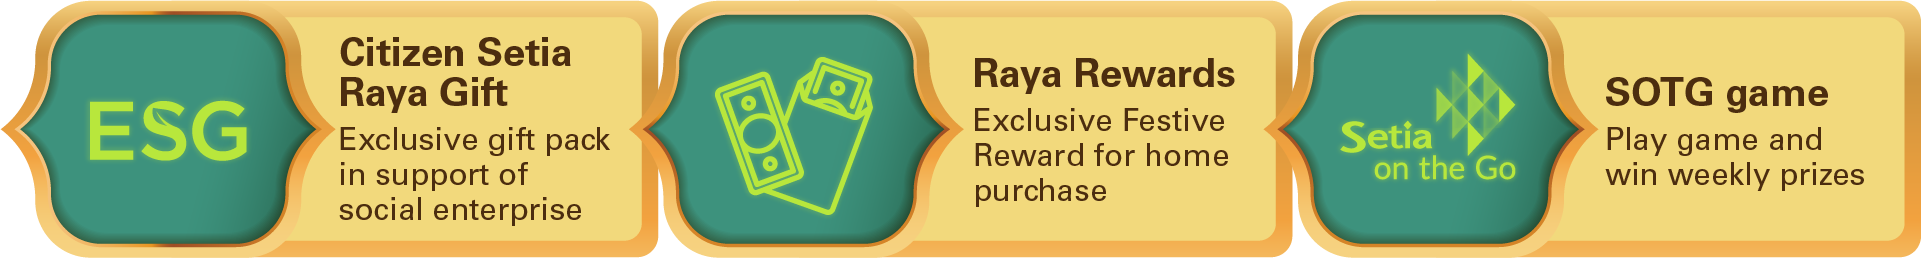 Raya Rewards